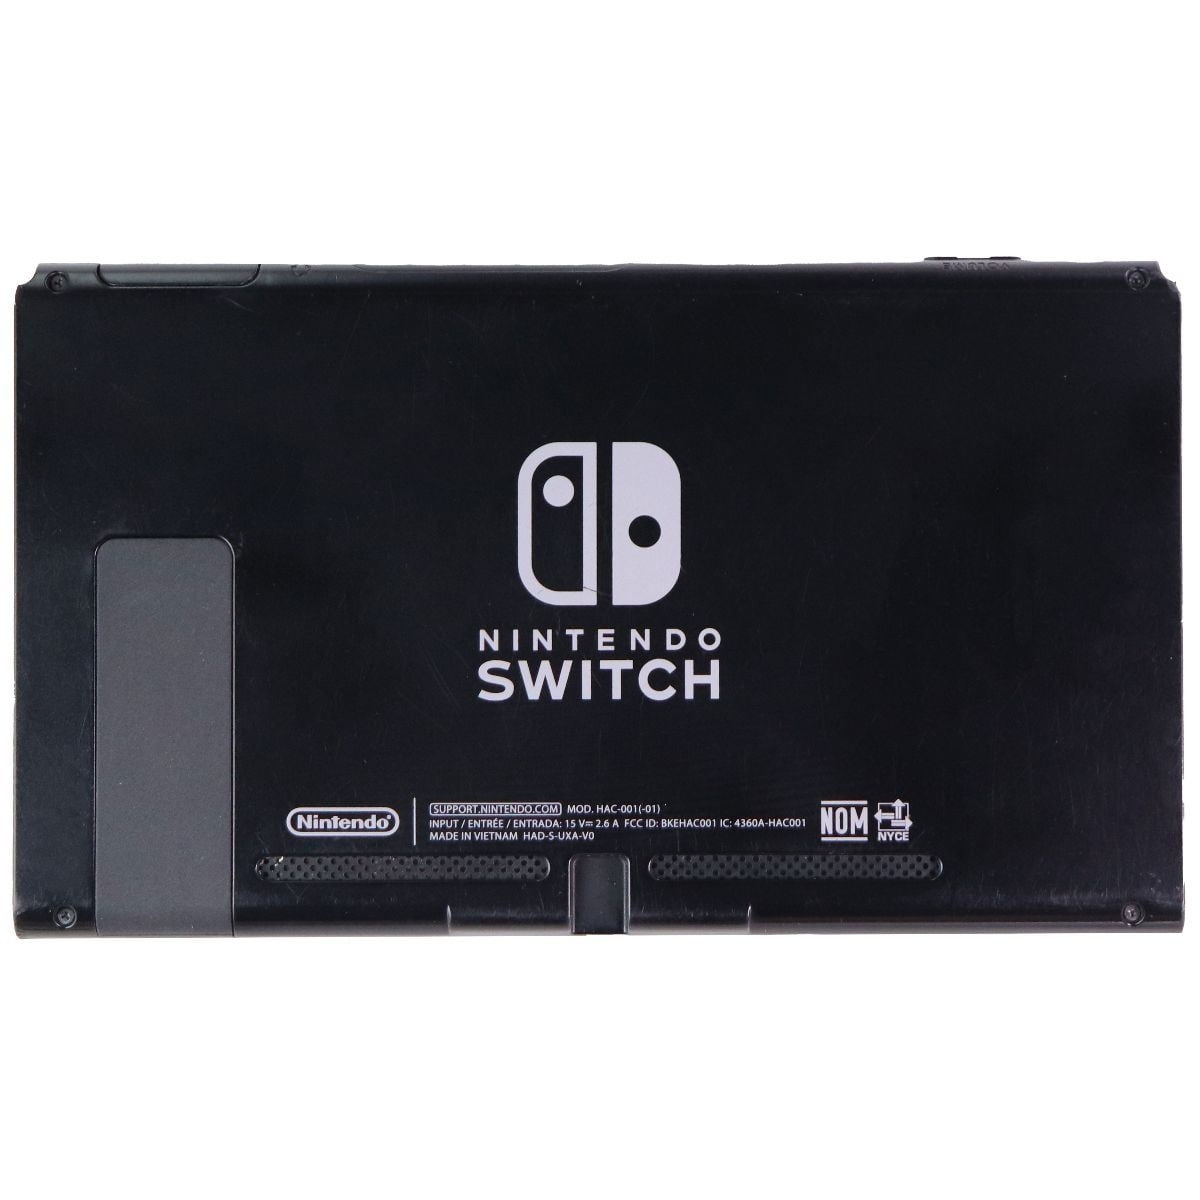 Nintendo Switch V2 32GB Game Console - Black (HAC-001(-01 